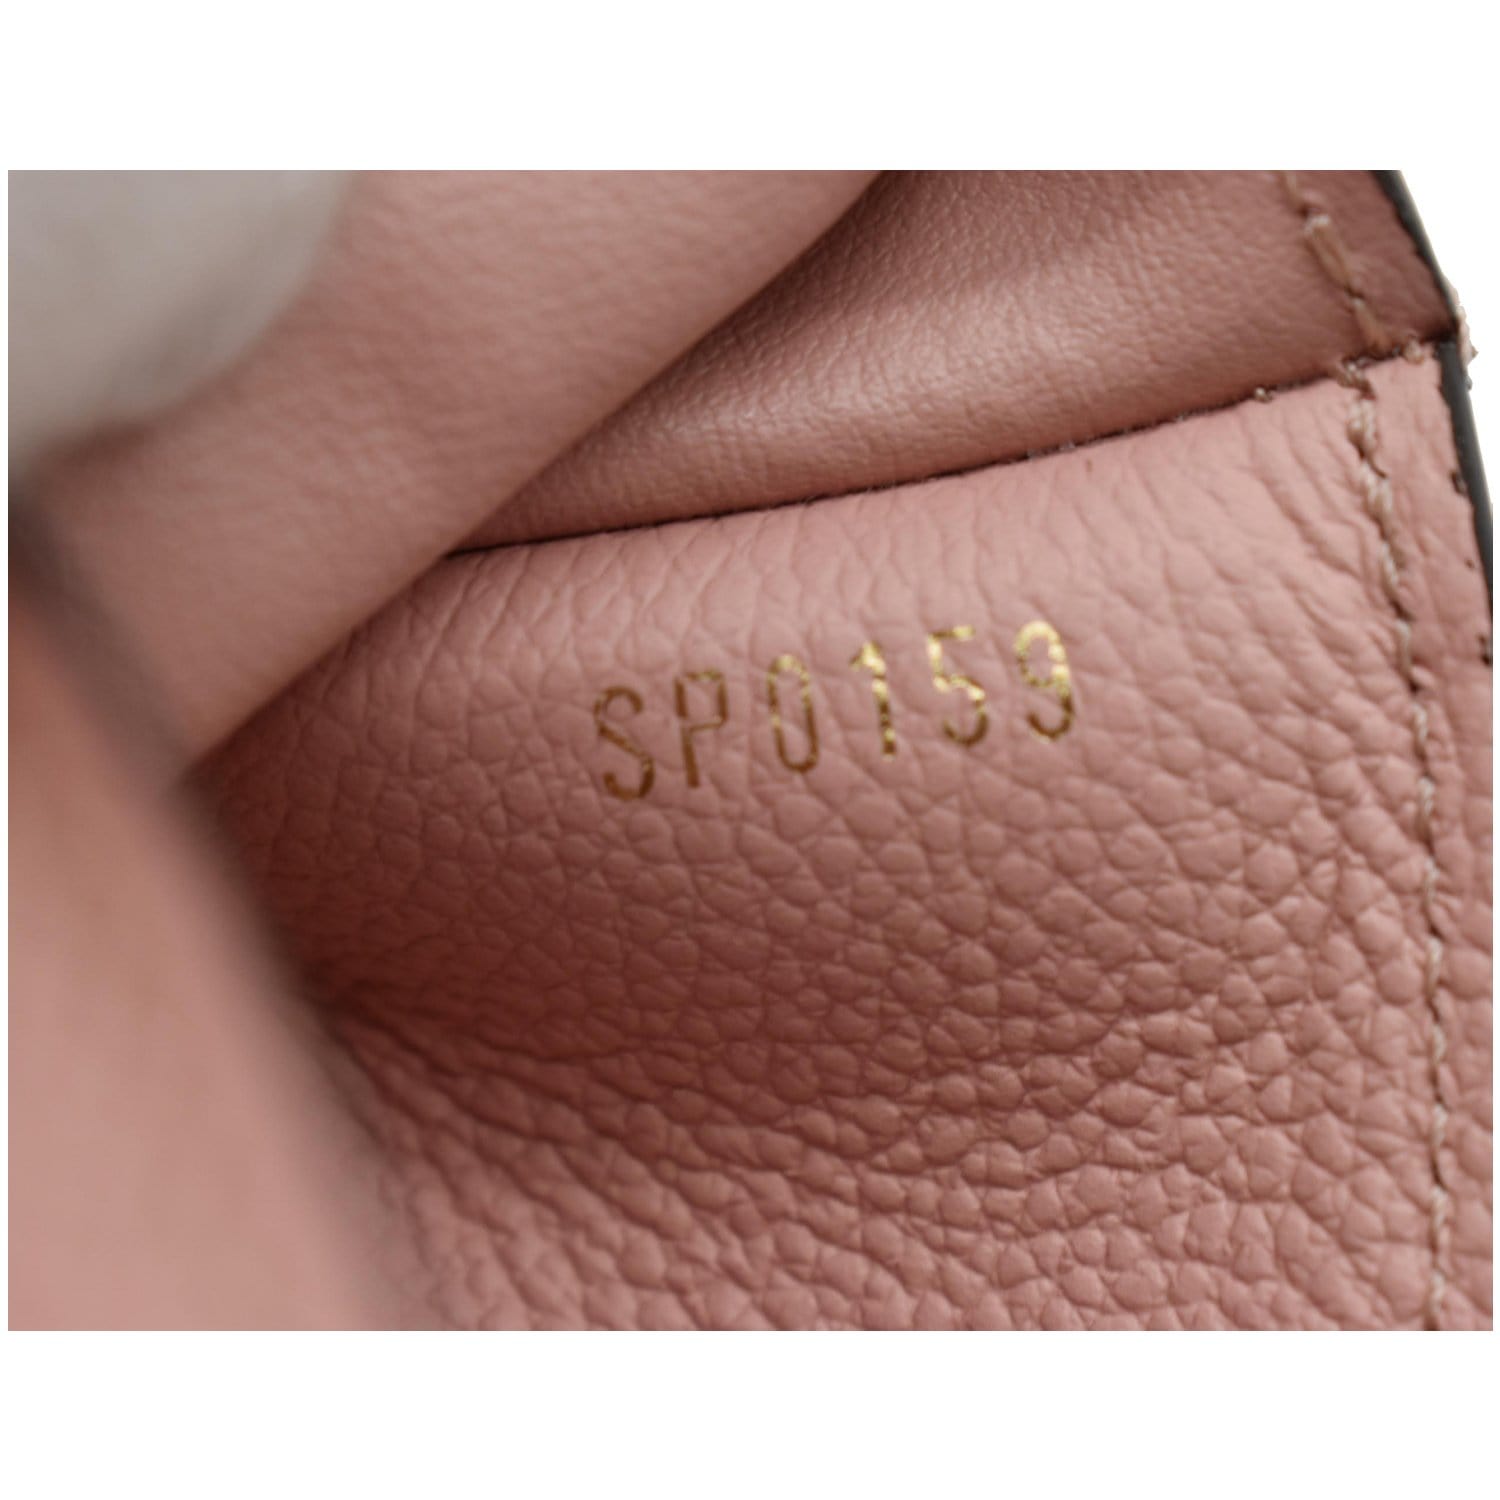 Buy Louis Vuitton Zoe Wallet Rose Poudre Monogram Empreinte M62936 at